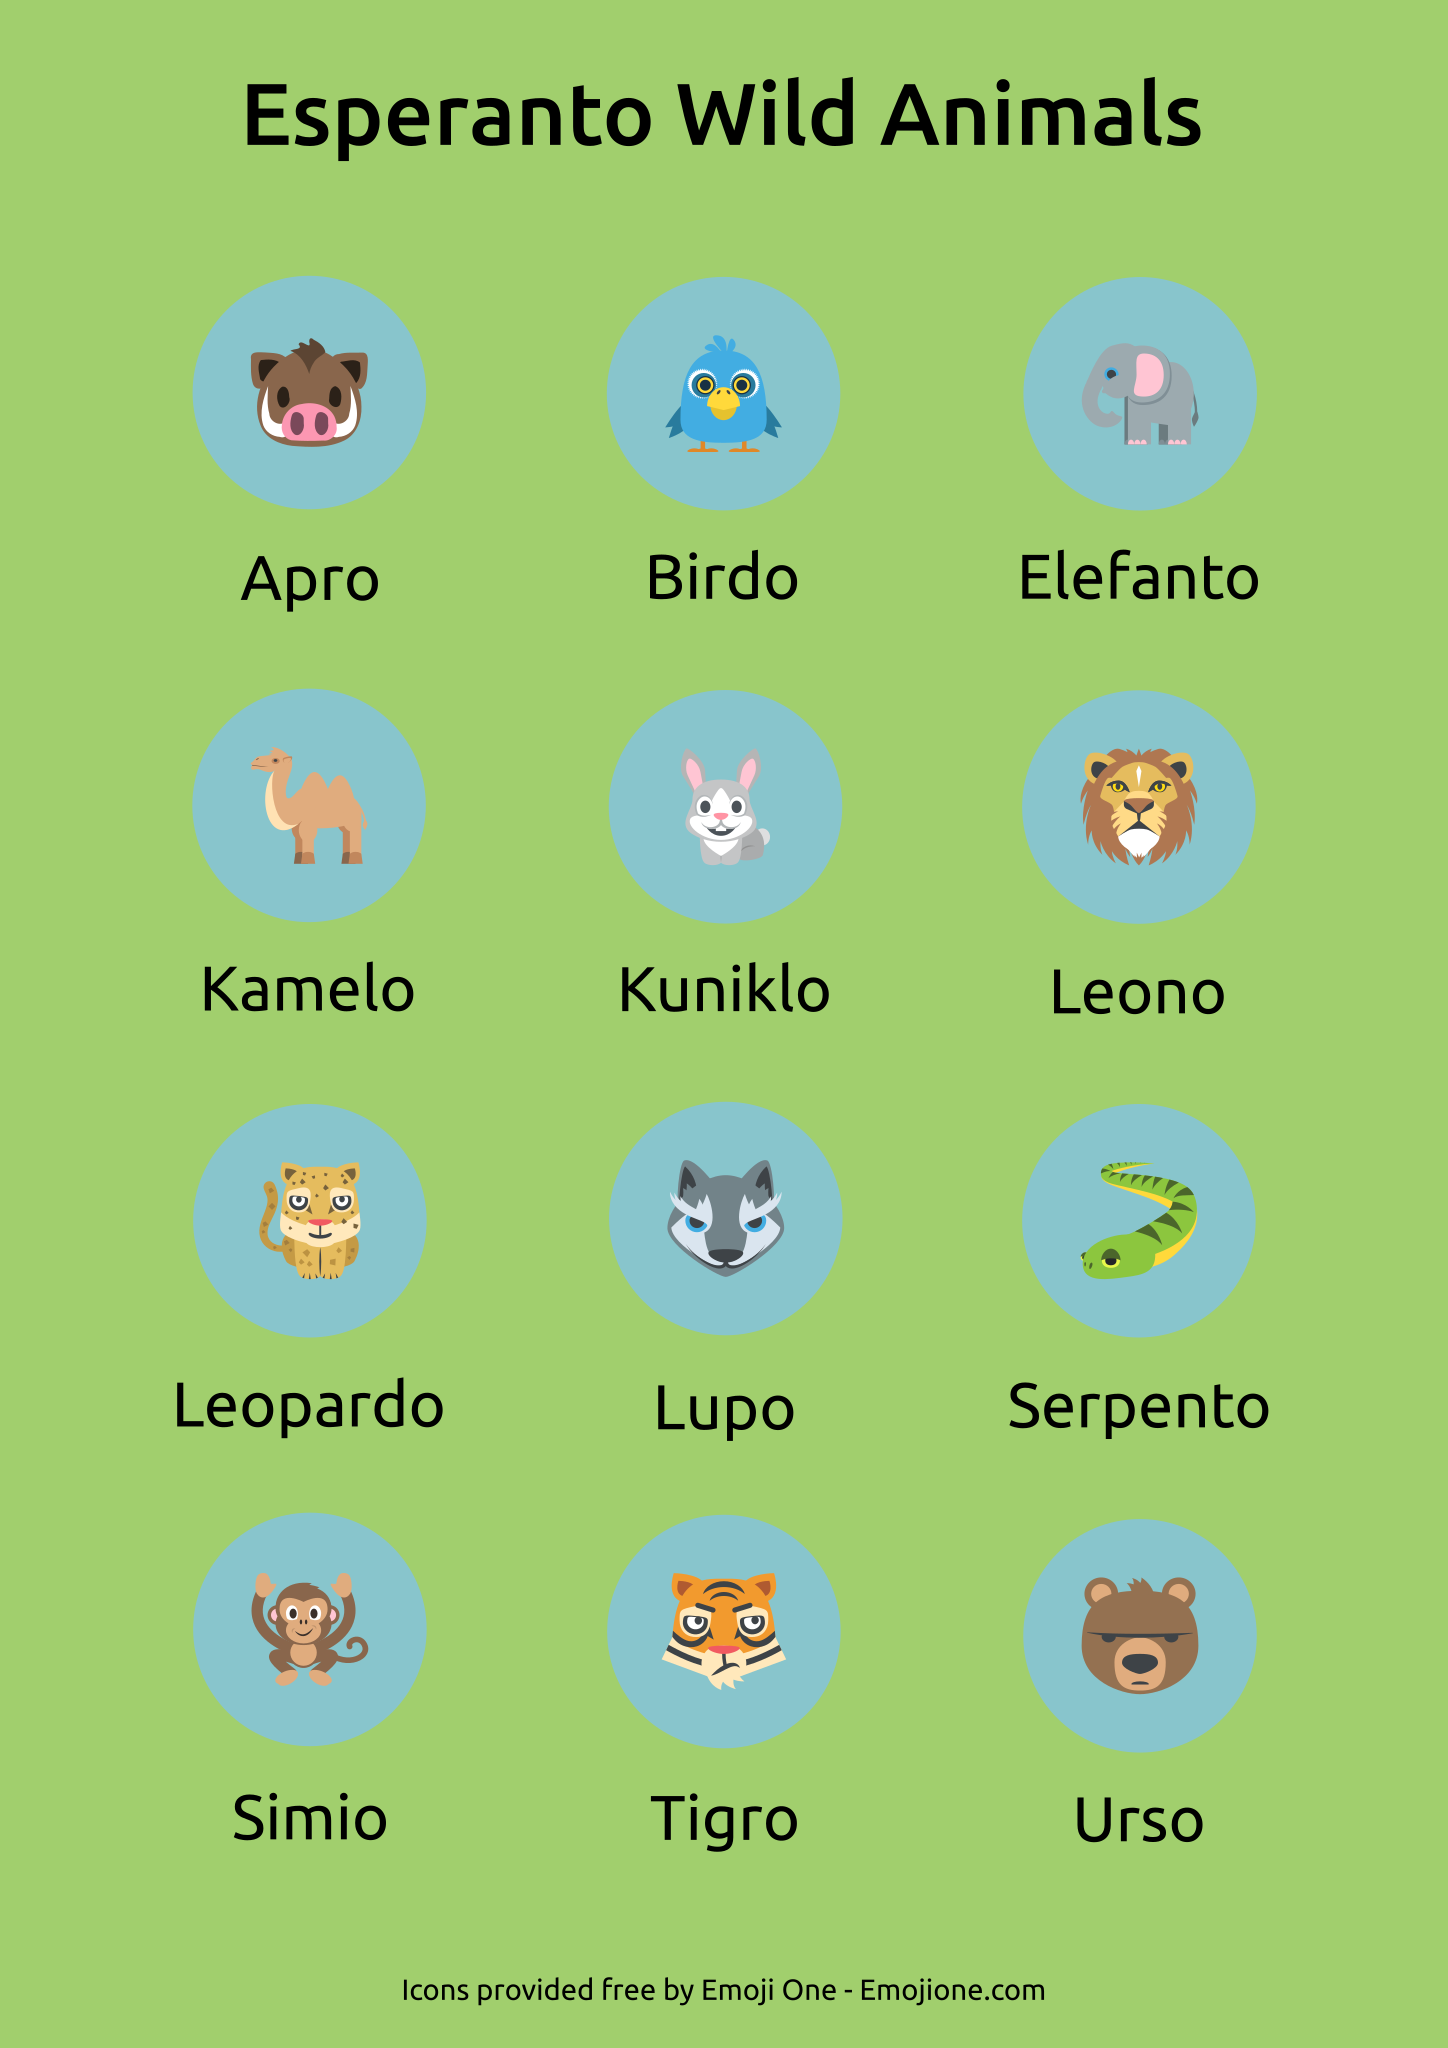 Esperanto Wild Animals - Yay! Esperanto